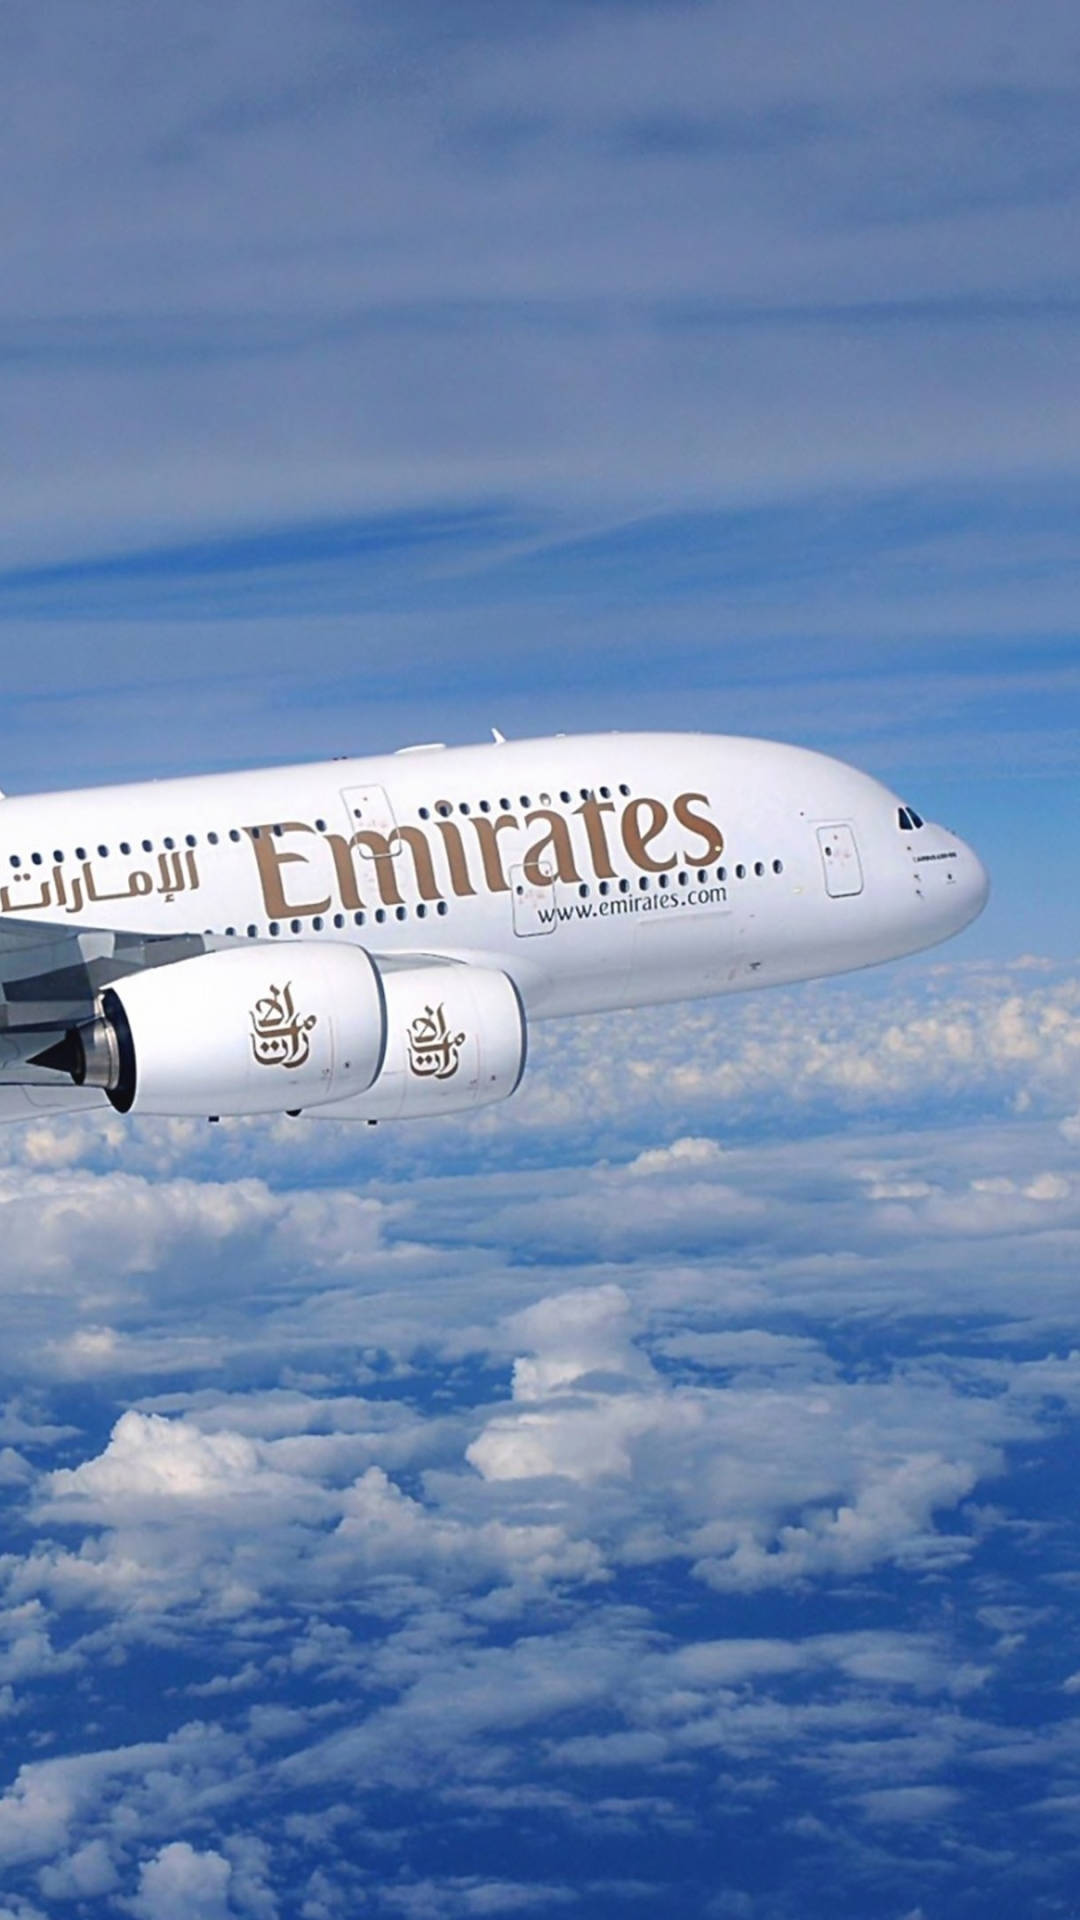 Emiratesa380 Fliegt Im Blauen Himmel. Wallpaper